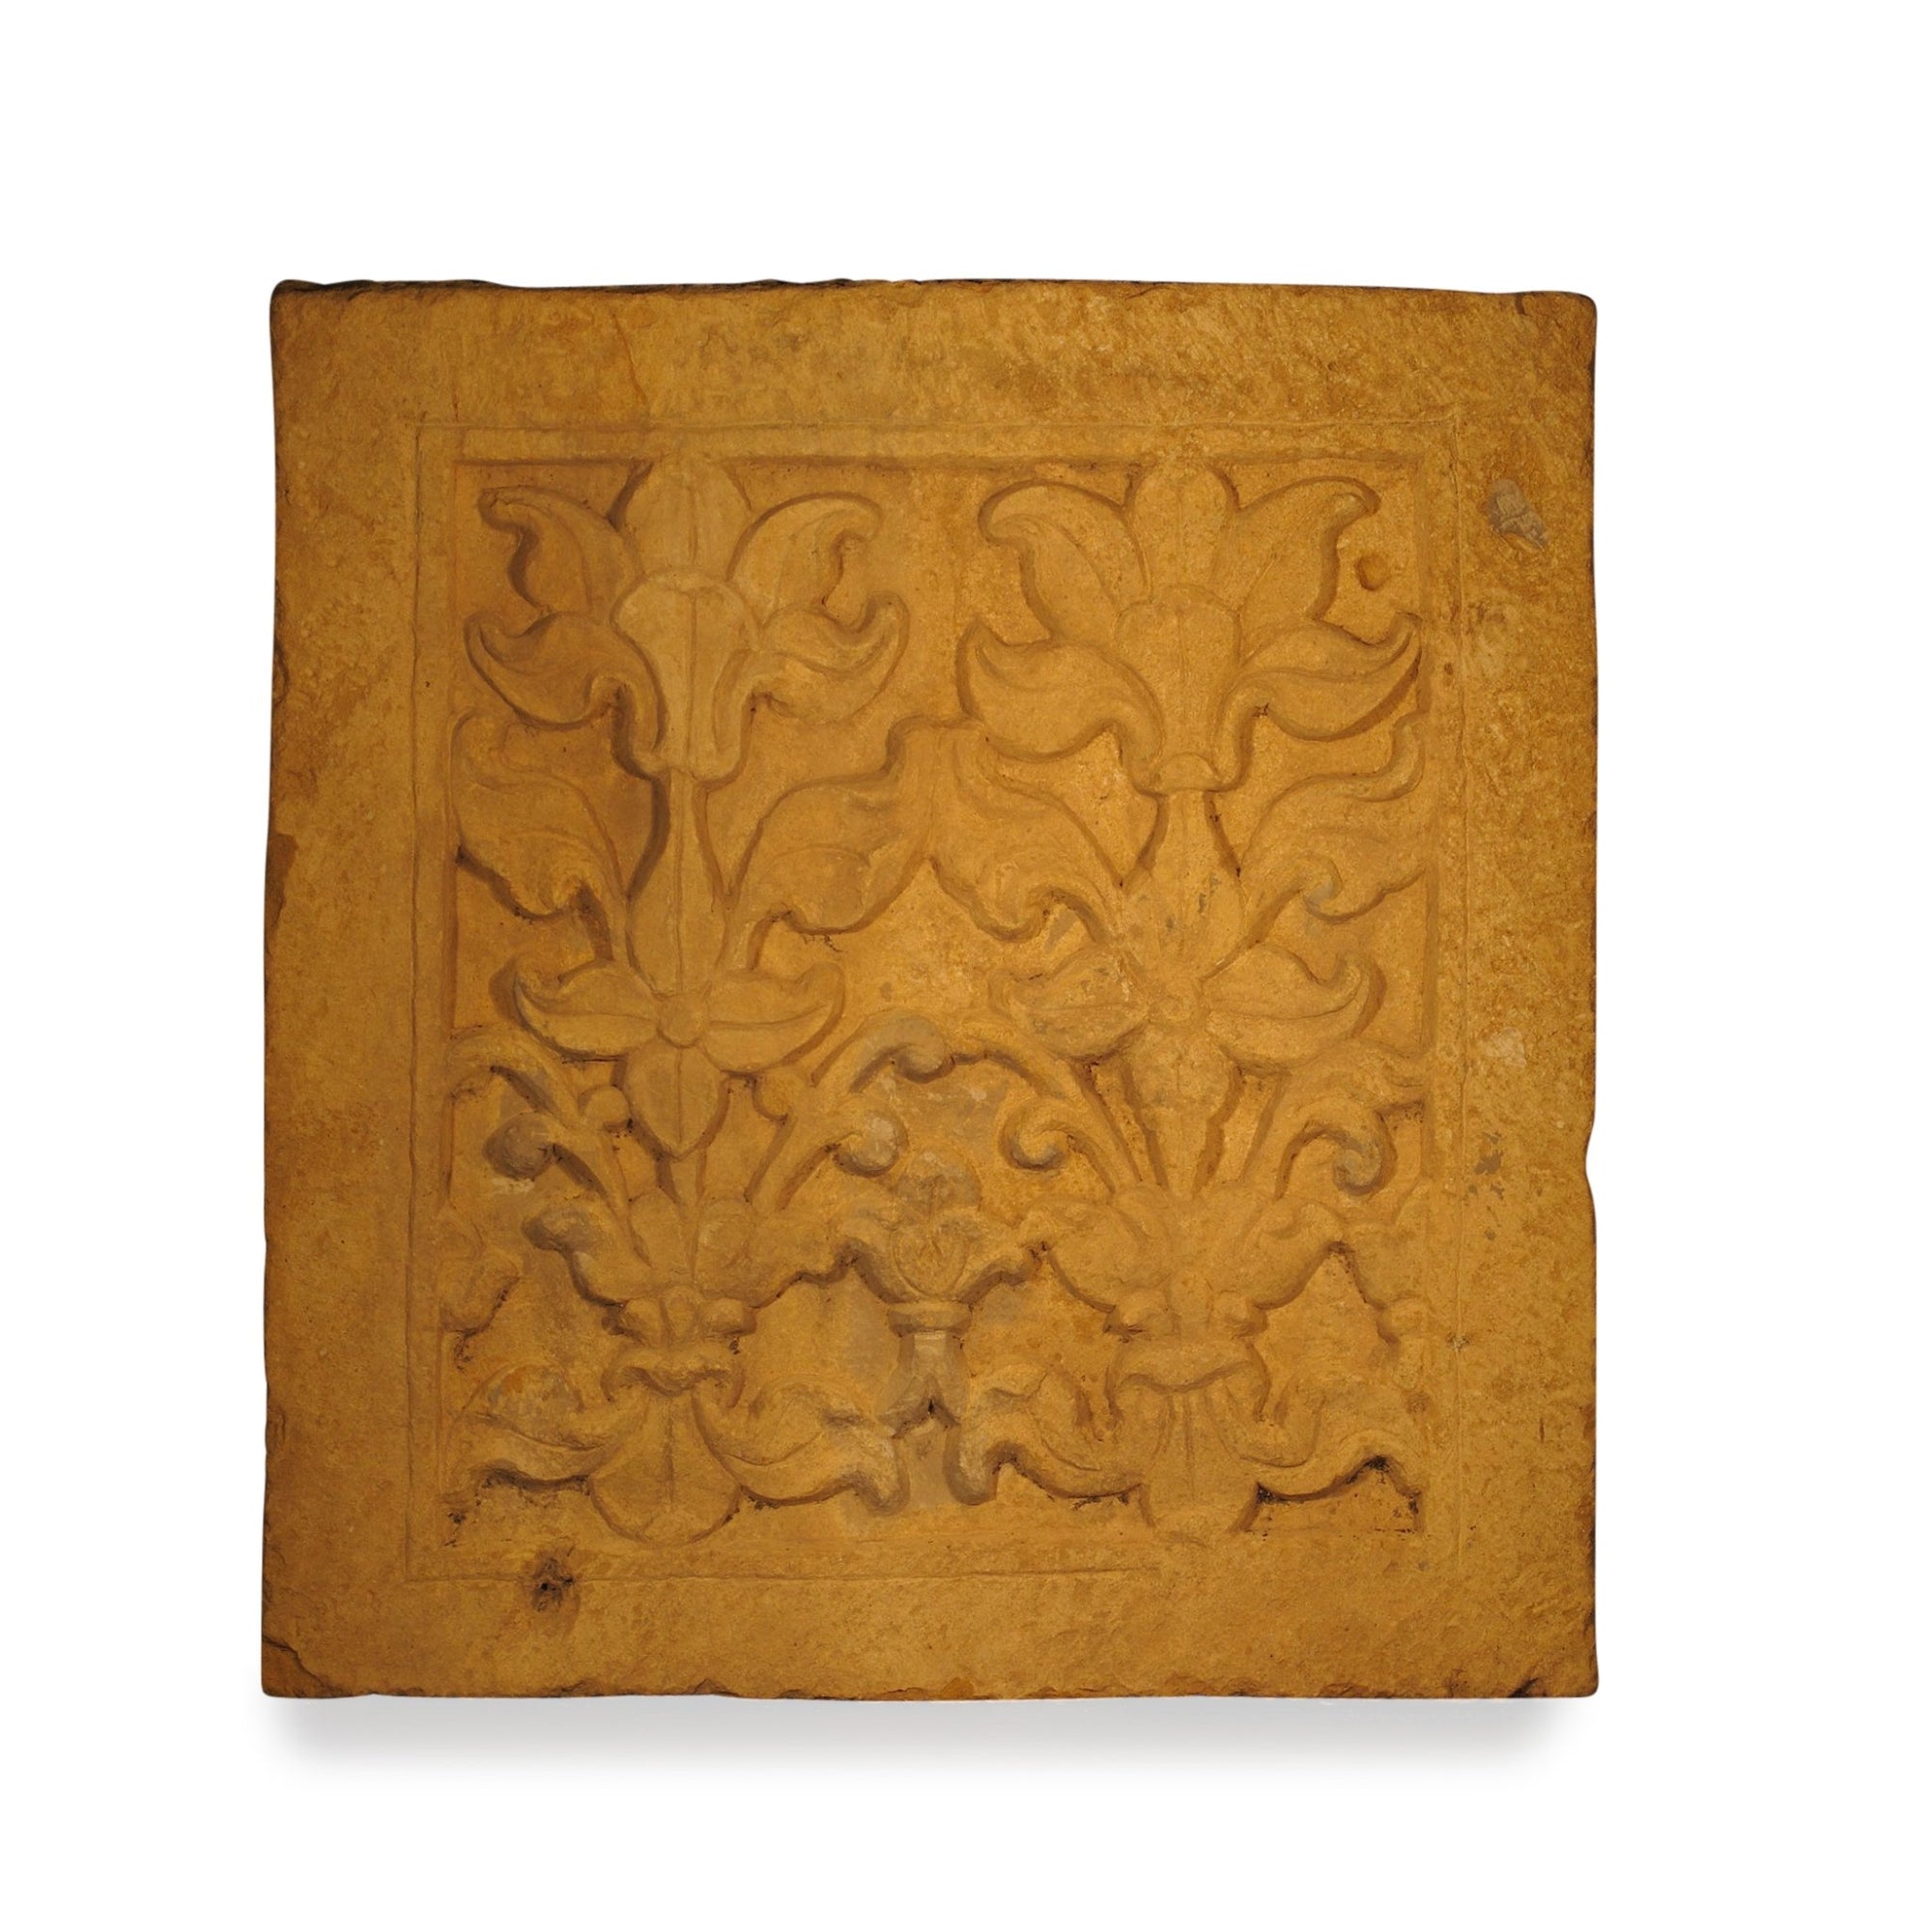 Carved Stone Panel from Jaisalmer - 19thC | Indigo Oriental Antiques